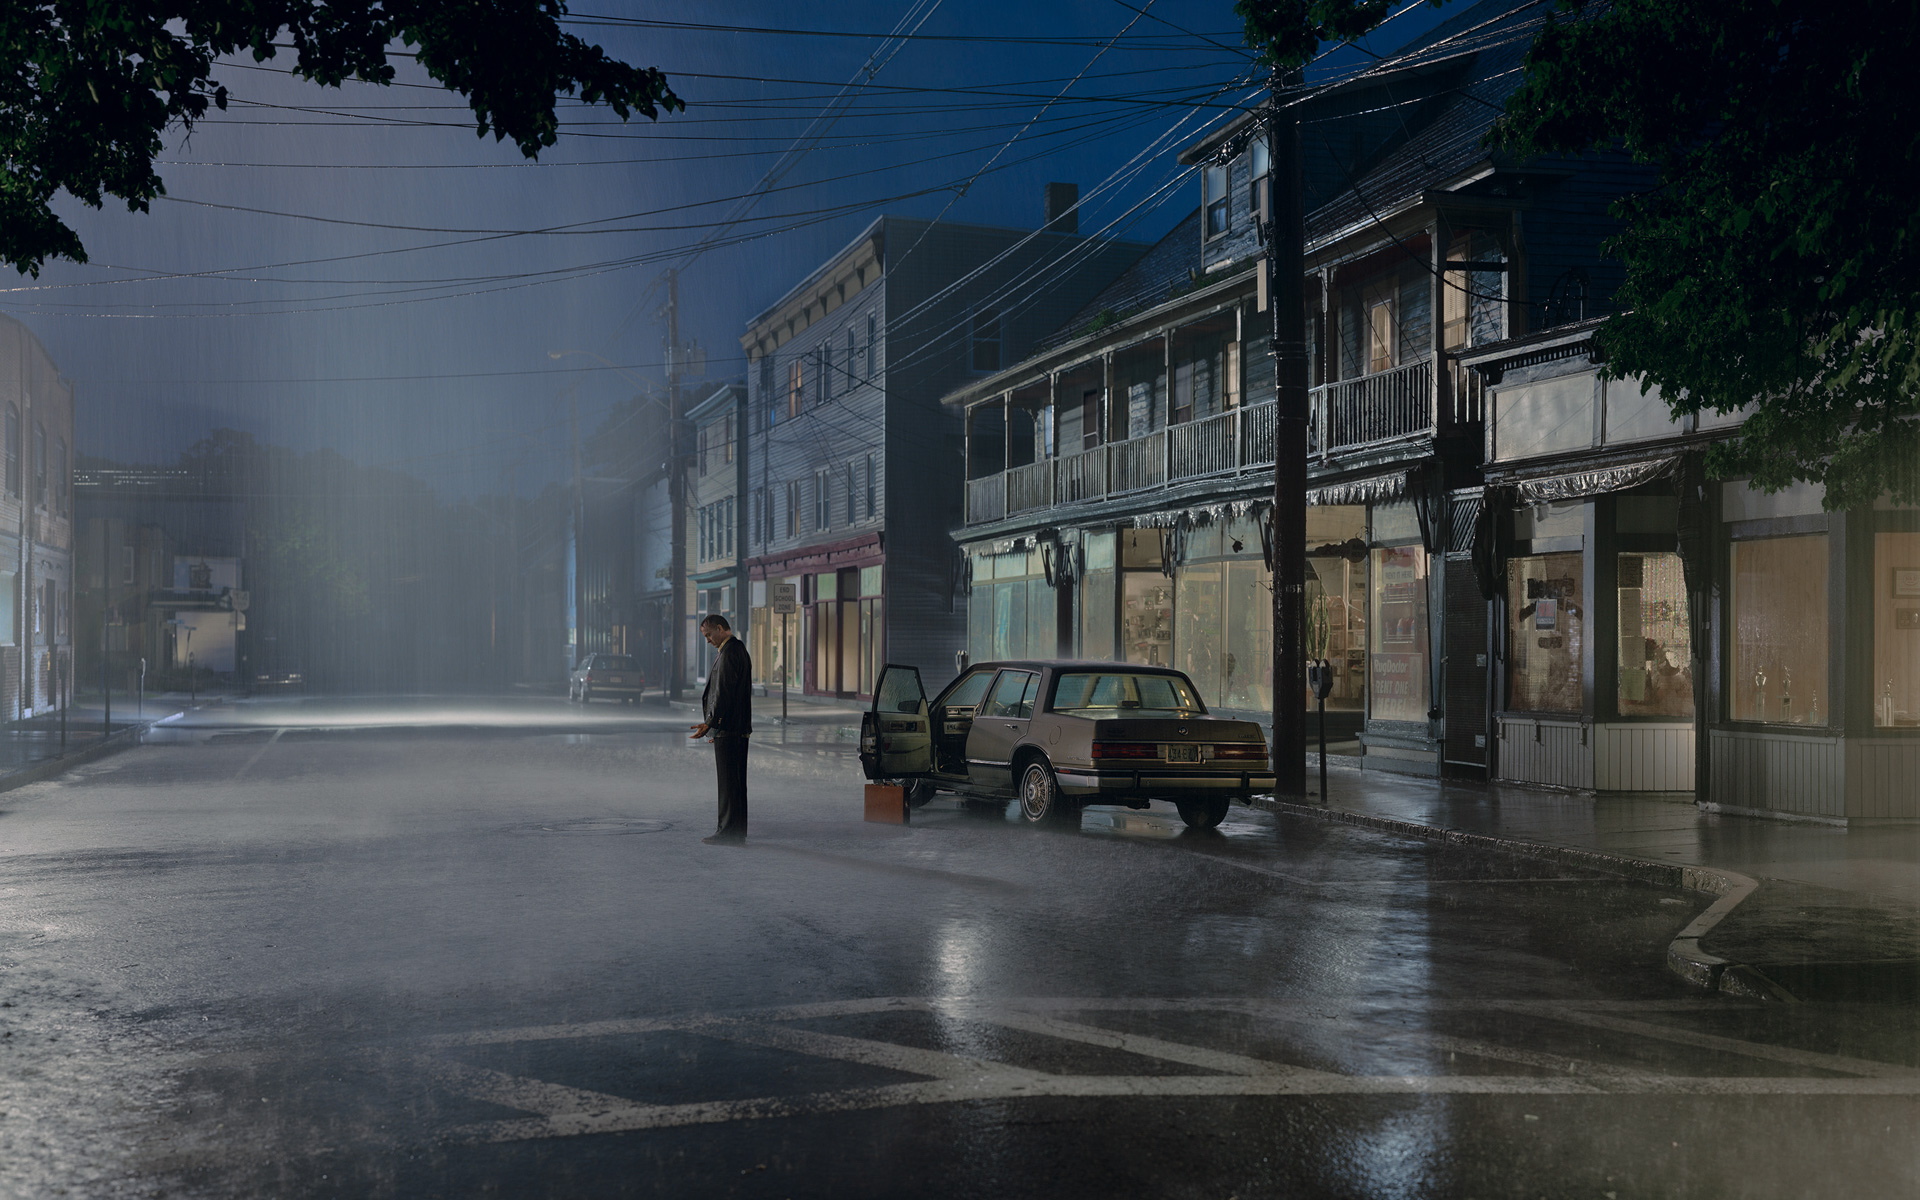 streets, night, rain, cars - desktop wallpaper